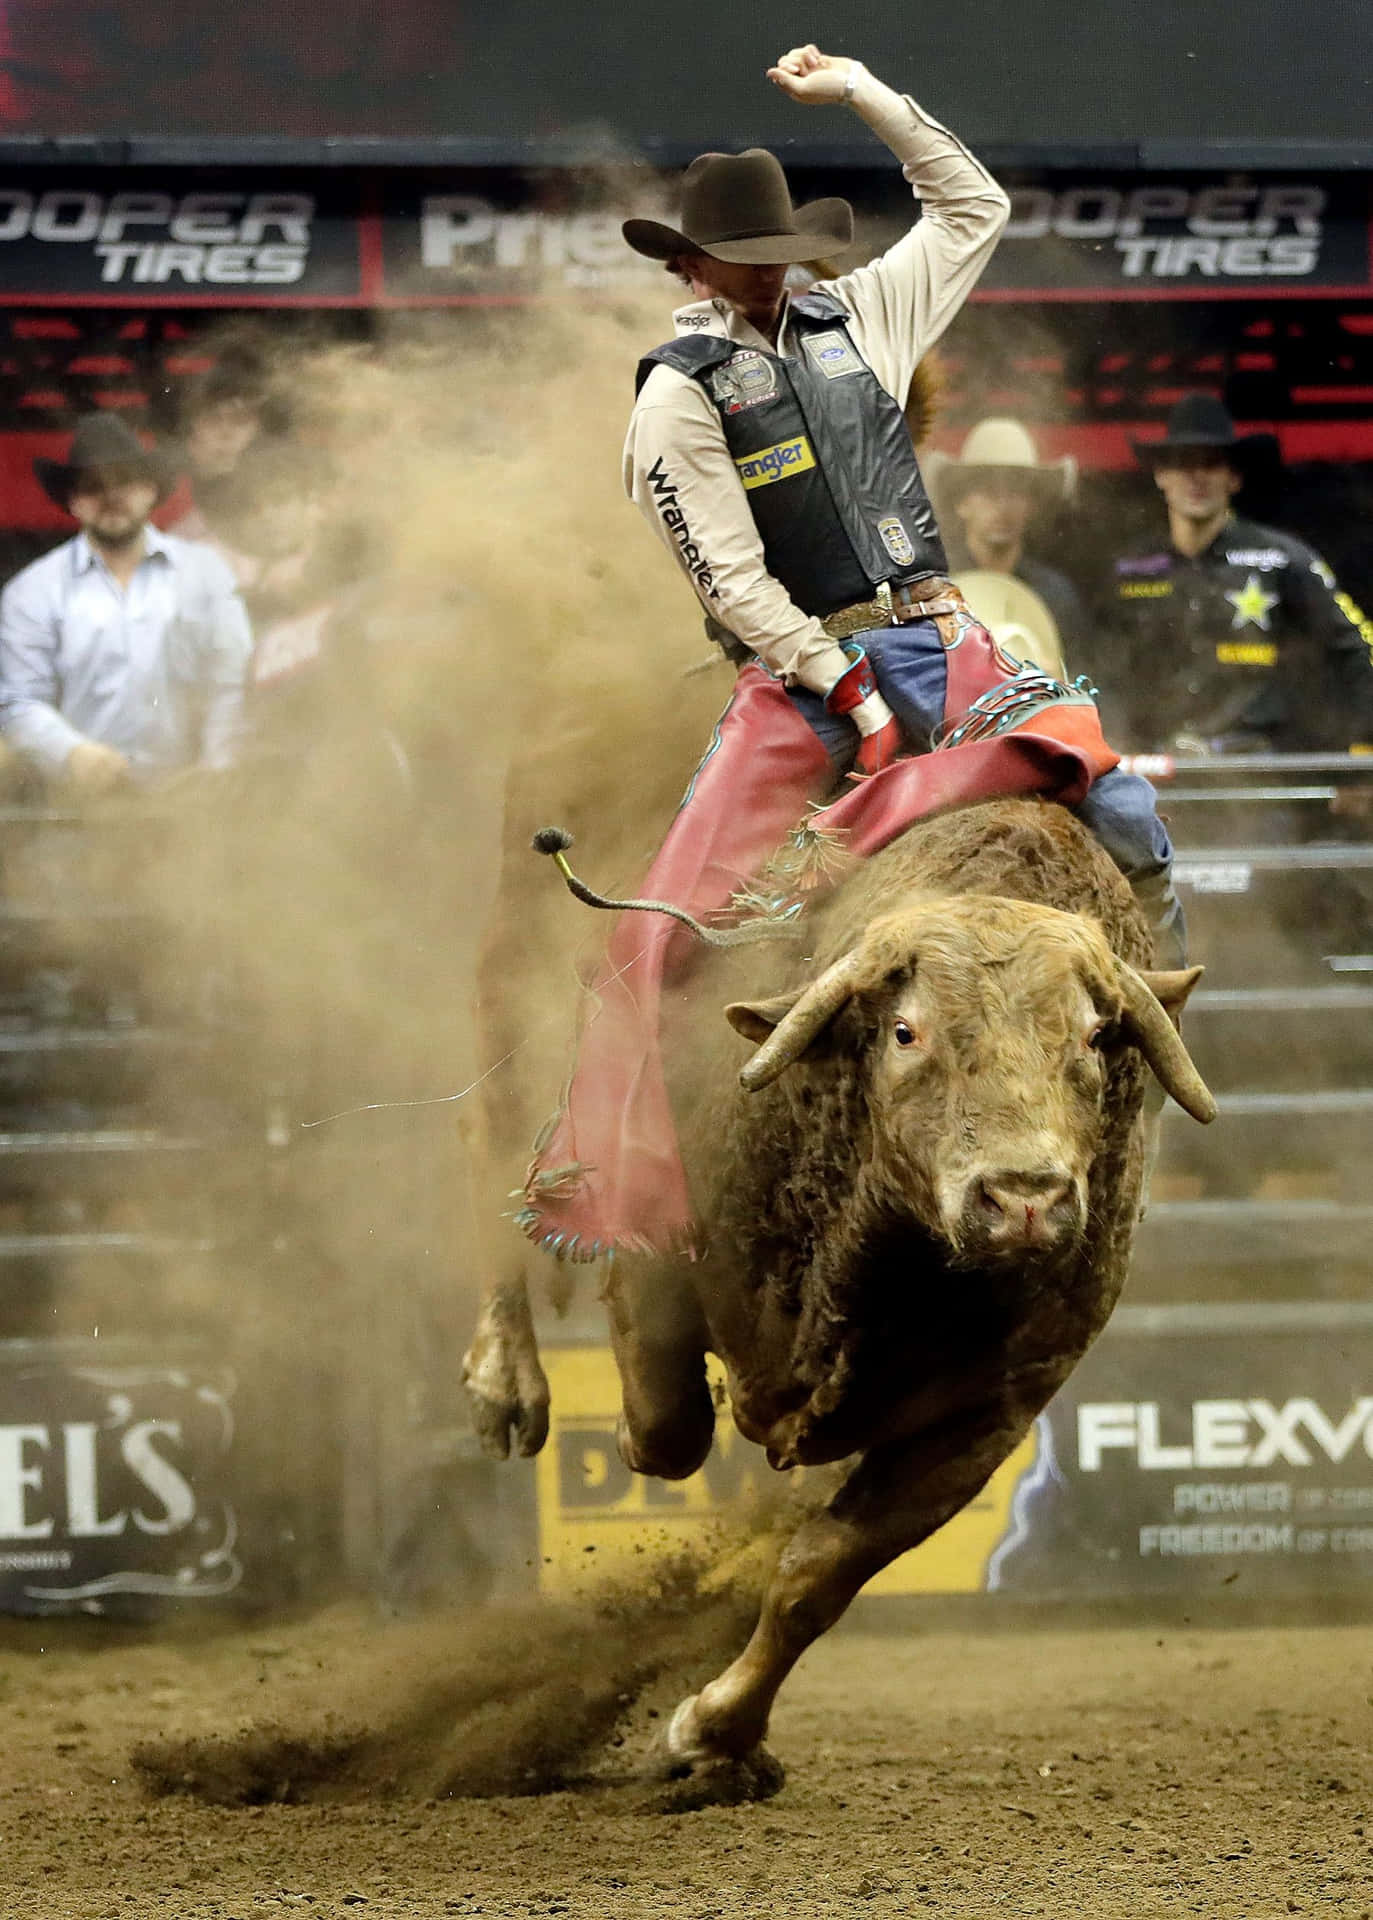 Professional Bull Rider Takes On Big Jumps